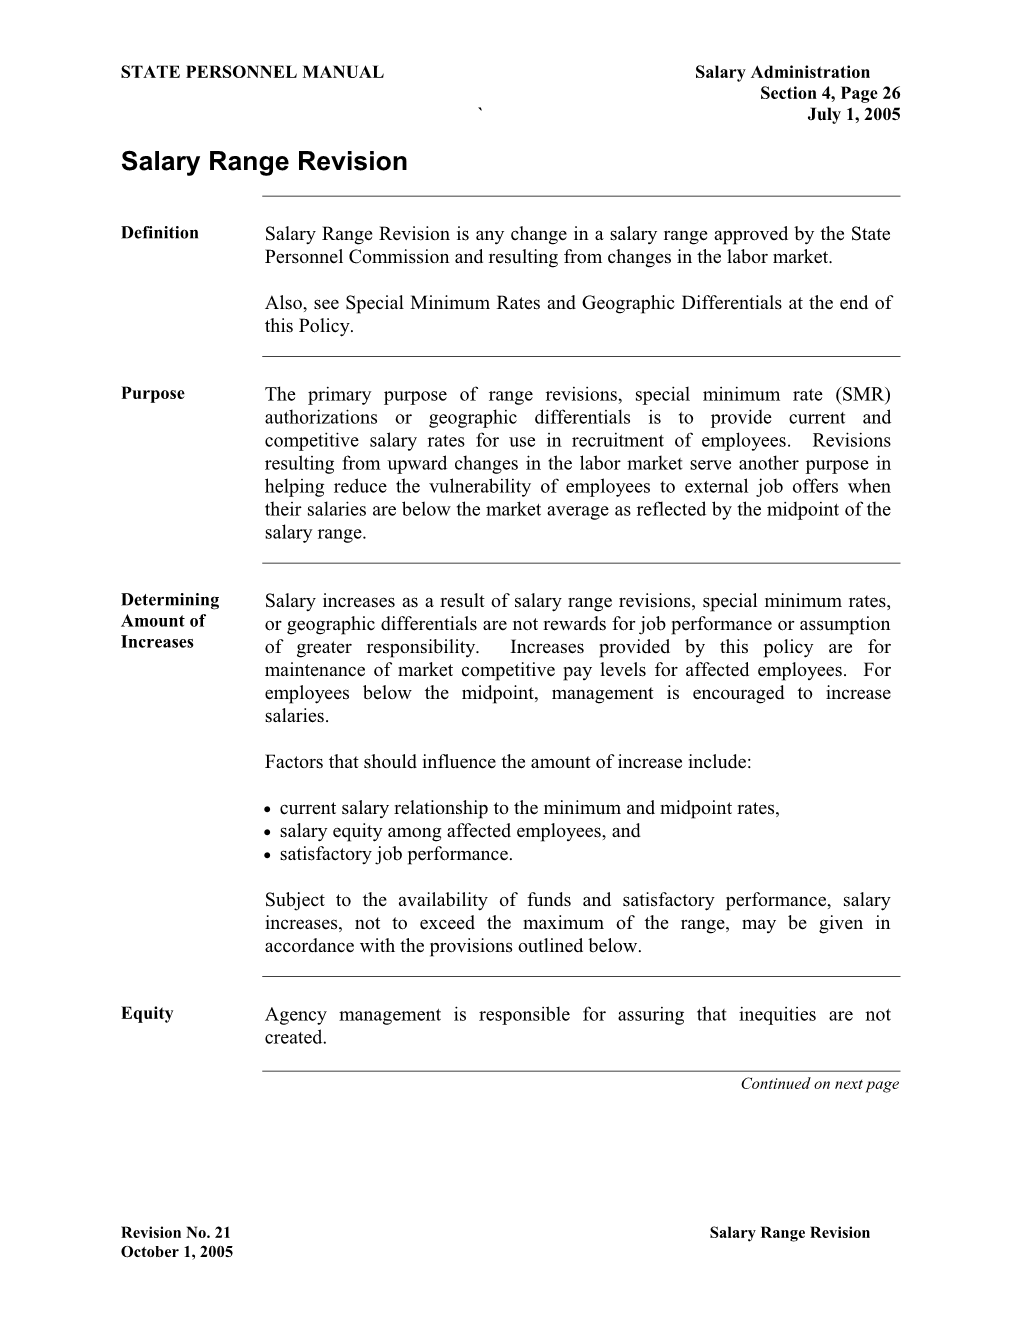 Salary Range Revision